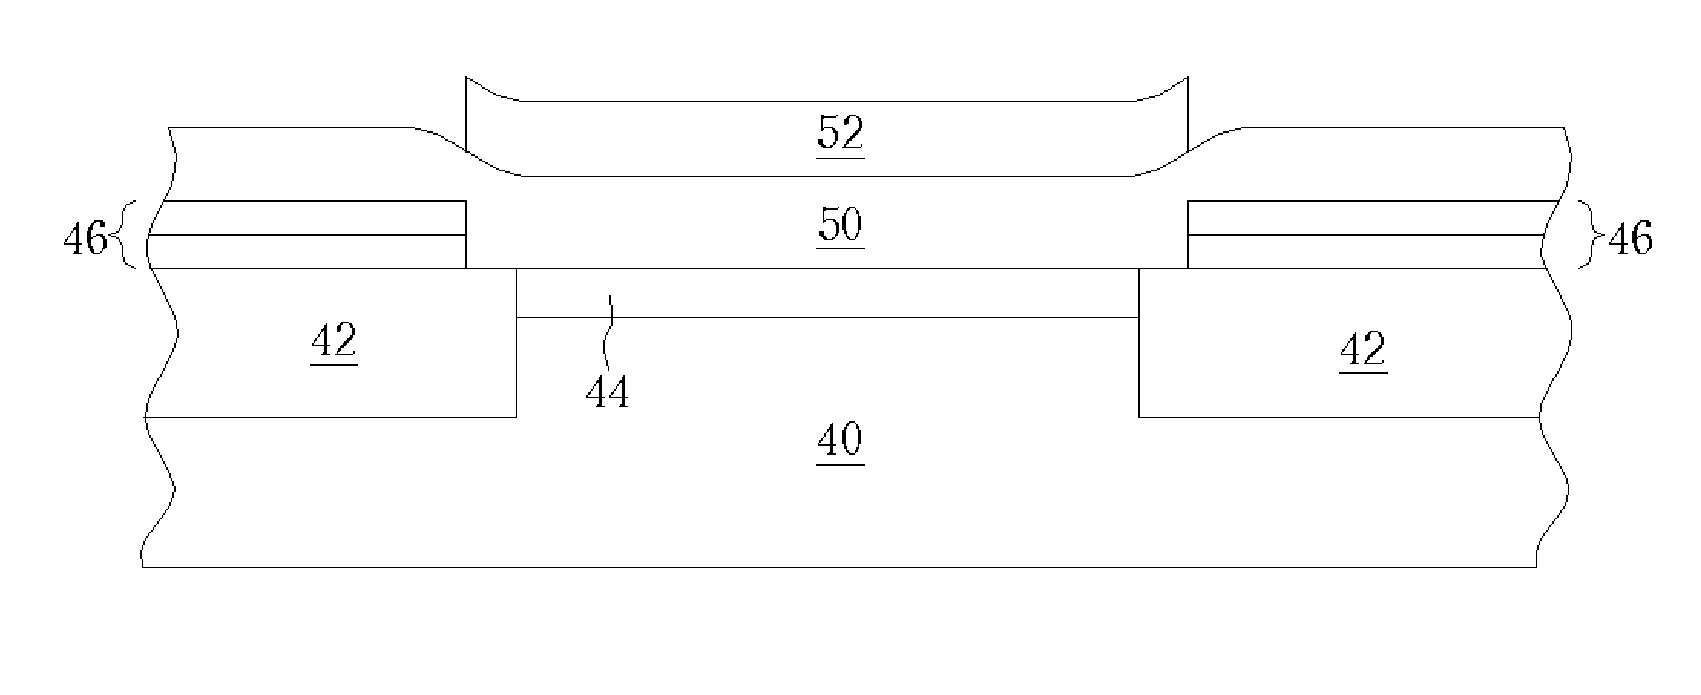 Method of fabricating a bipolar junction transistor